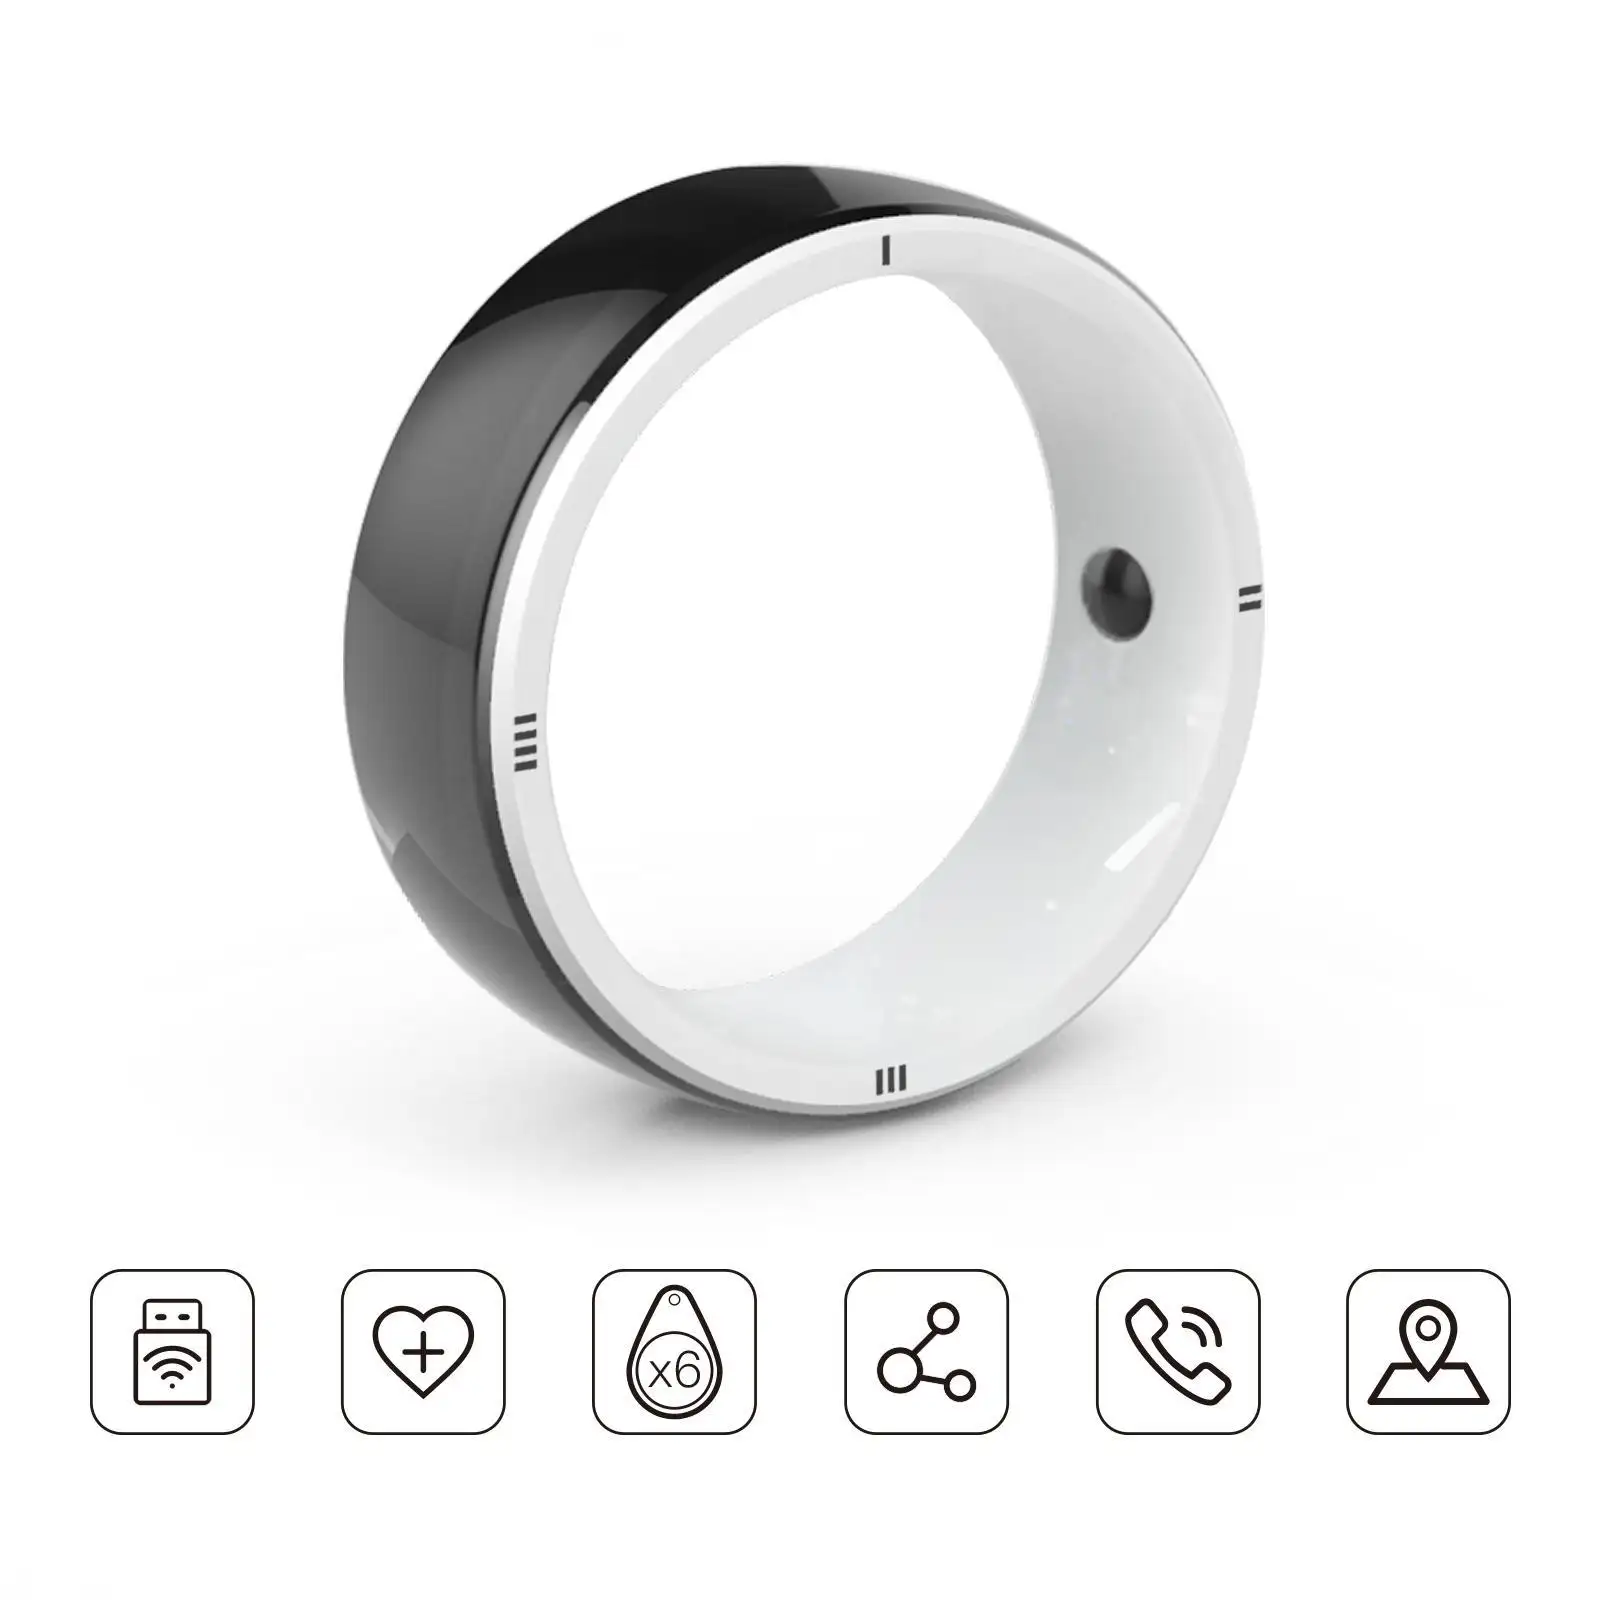 JAKCOM R5 Smart Ring neues Smart Ring Produkt als Bambuselektronik 2×8 Splitter r1800tiii 3 in 1 tragbares Gamepad größter hdd